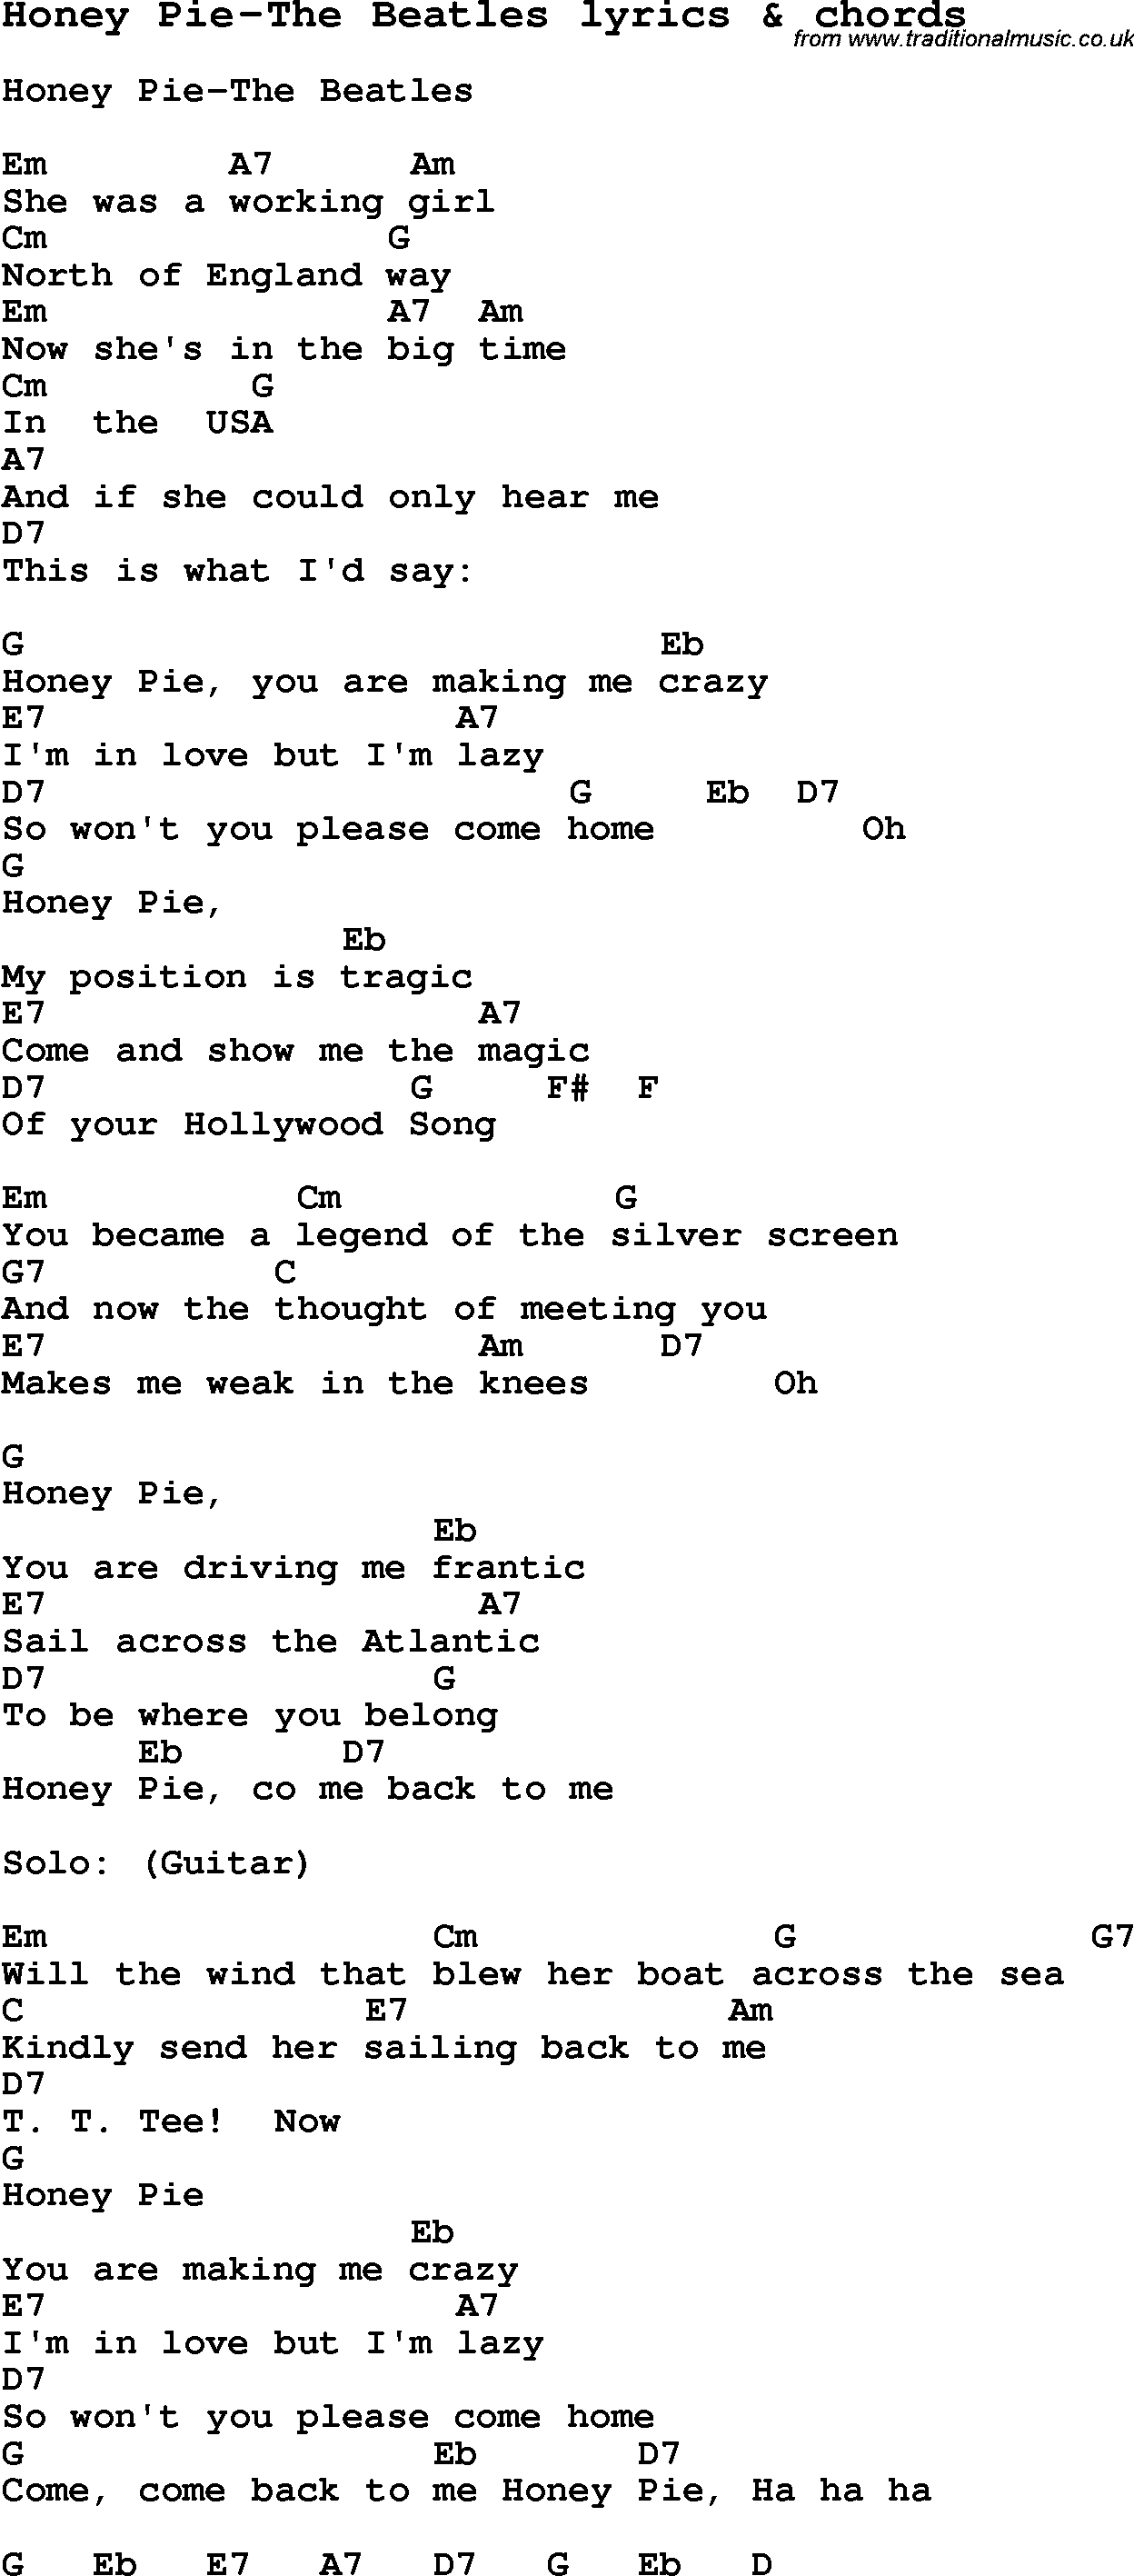 Love Song Lyrics for: Honey Pie-The Beatles with chords for Ukulele, Guitar Banjo etc.